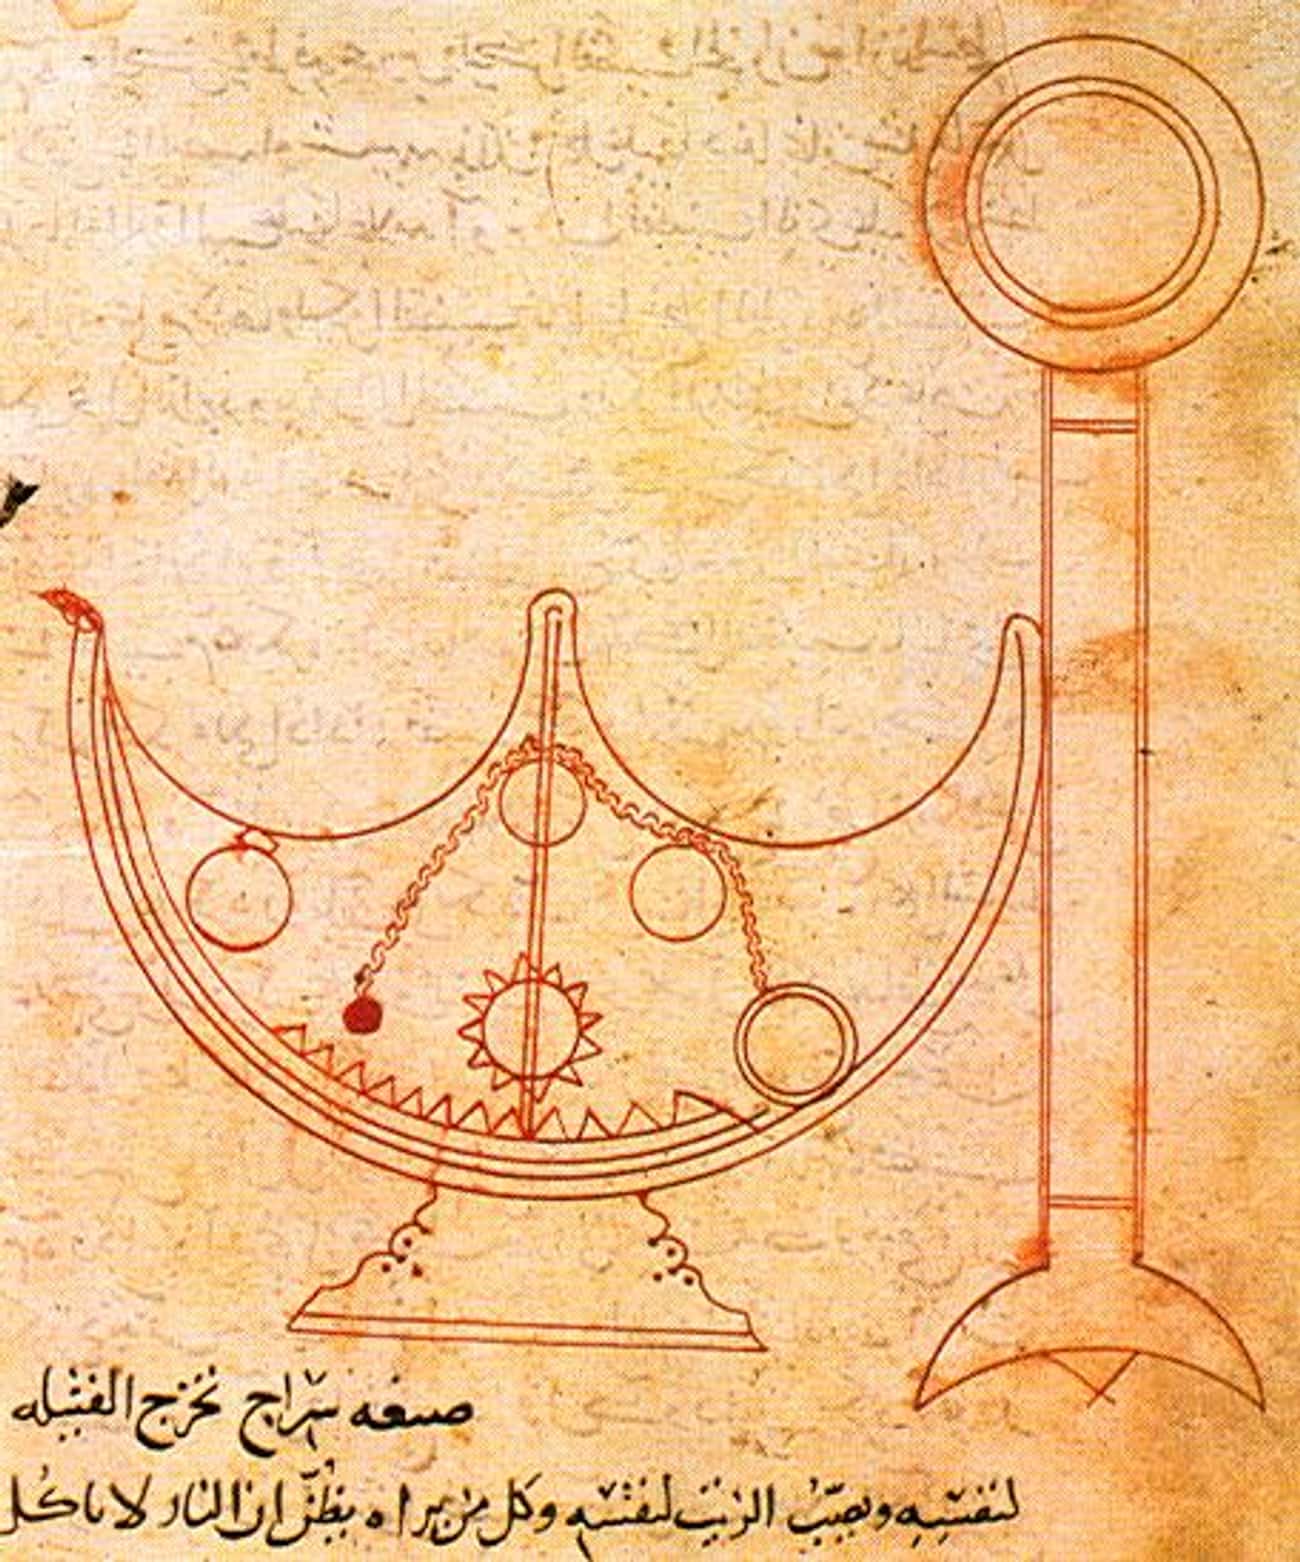 Ahmad bin Musa